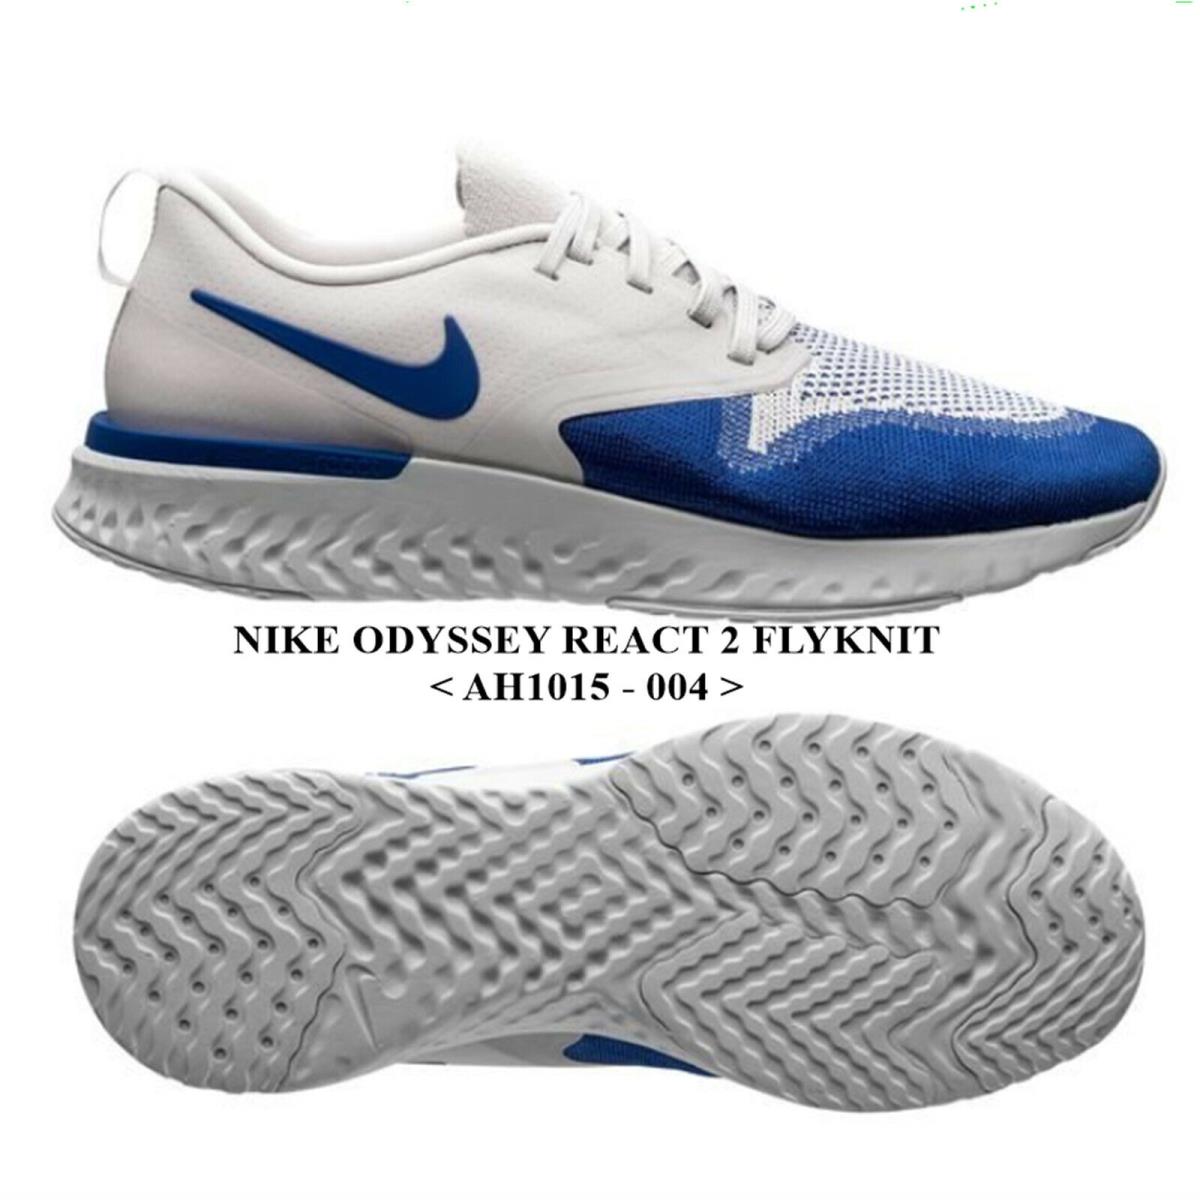 Nike Odyssey React 2 Flyknit AH1015 - 004 Men`s Running Shoes.nwb NO Lid